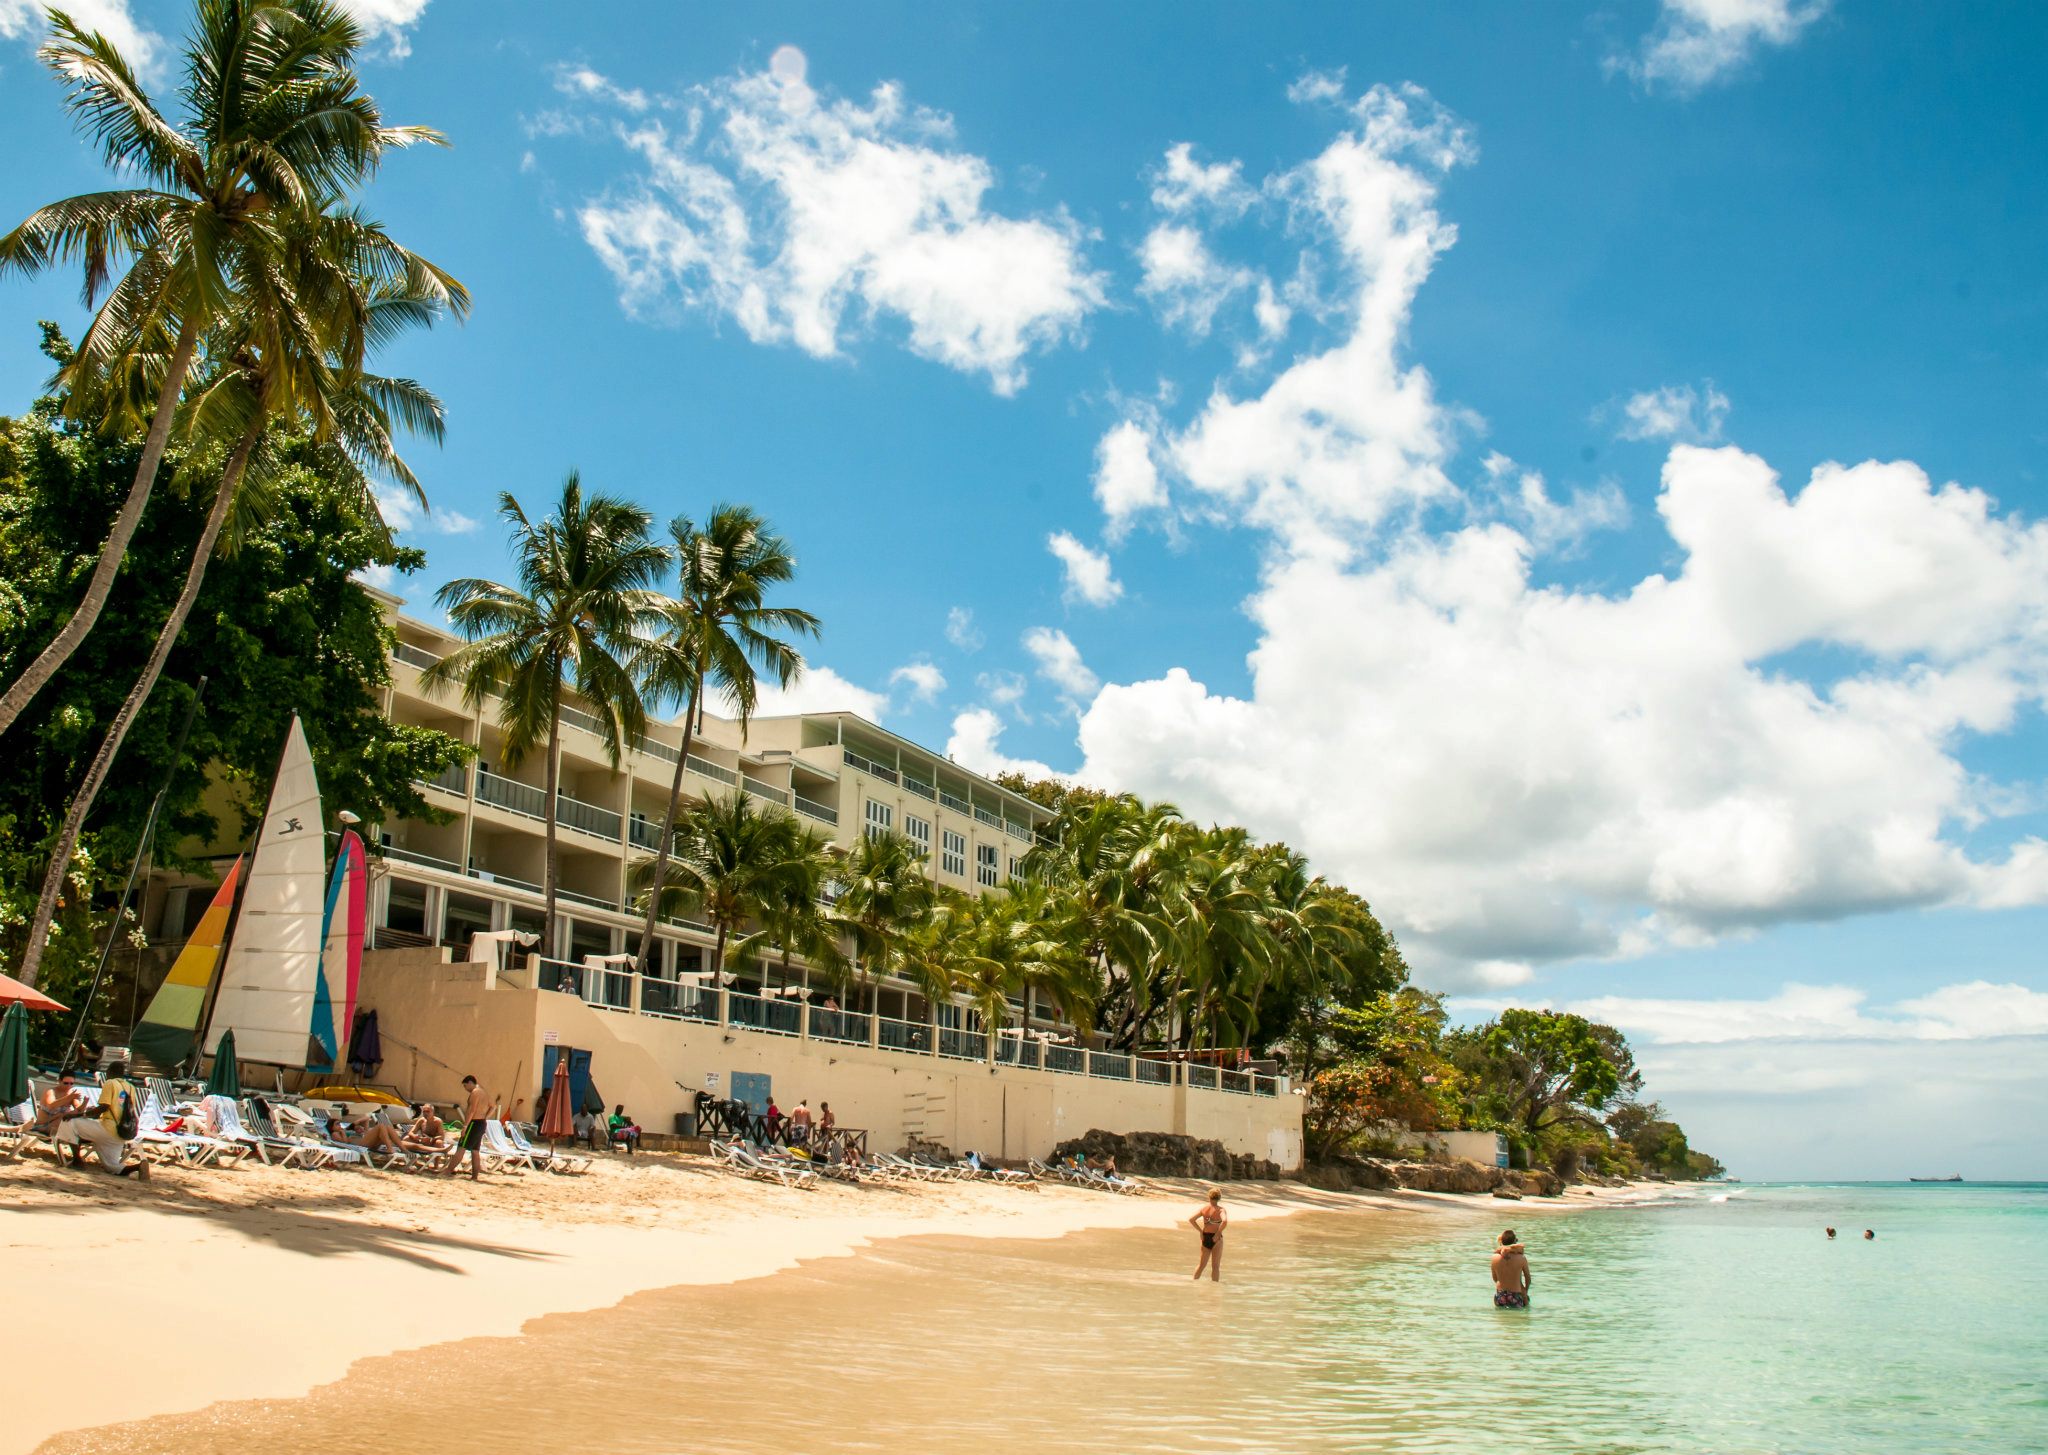 Waves Resort Barbados Reviews Updated 2017